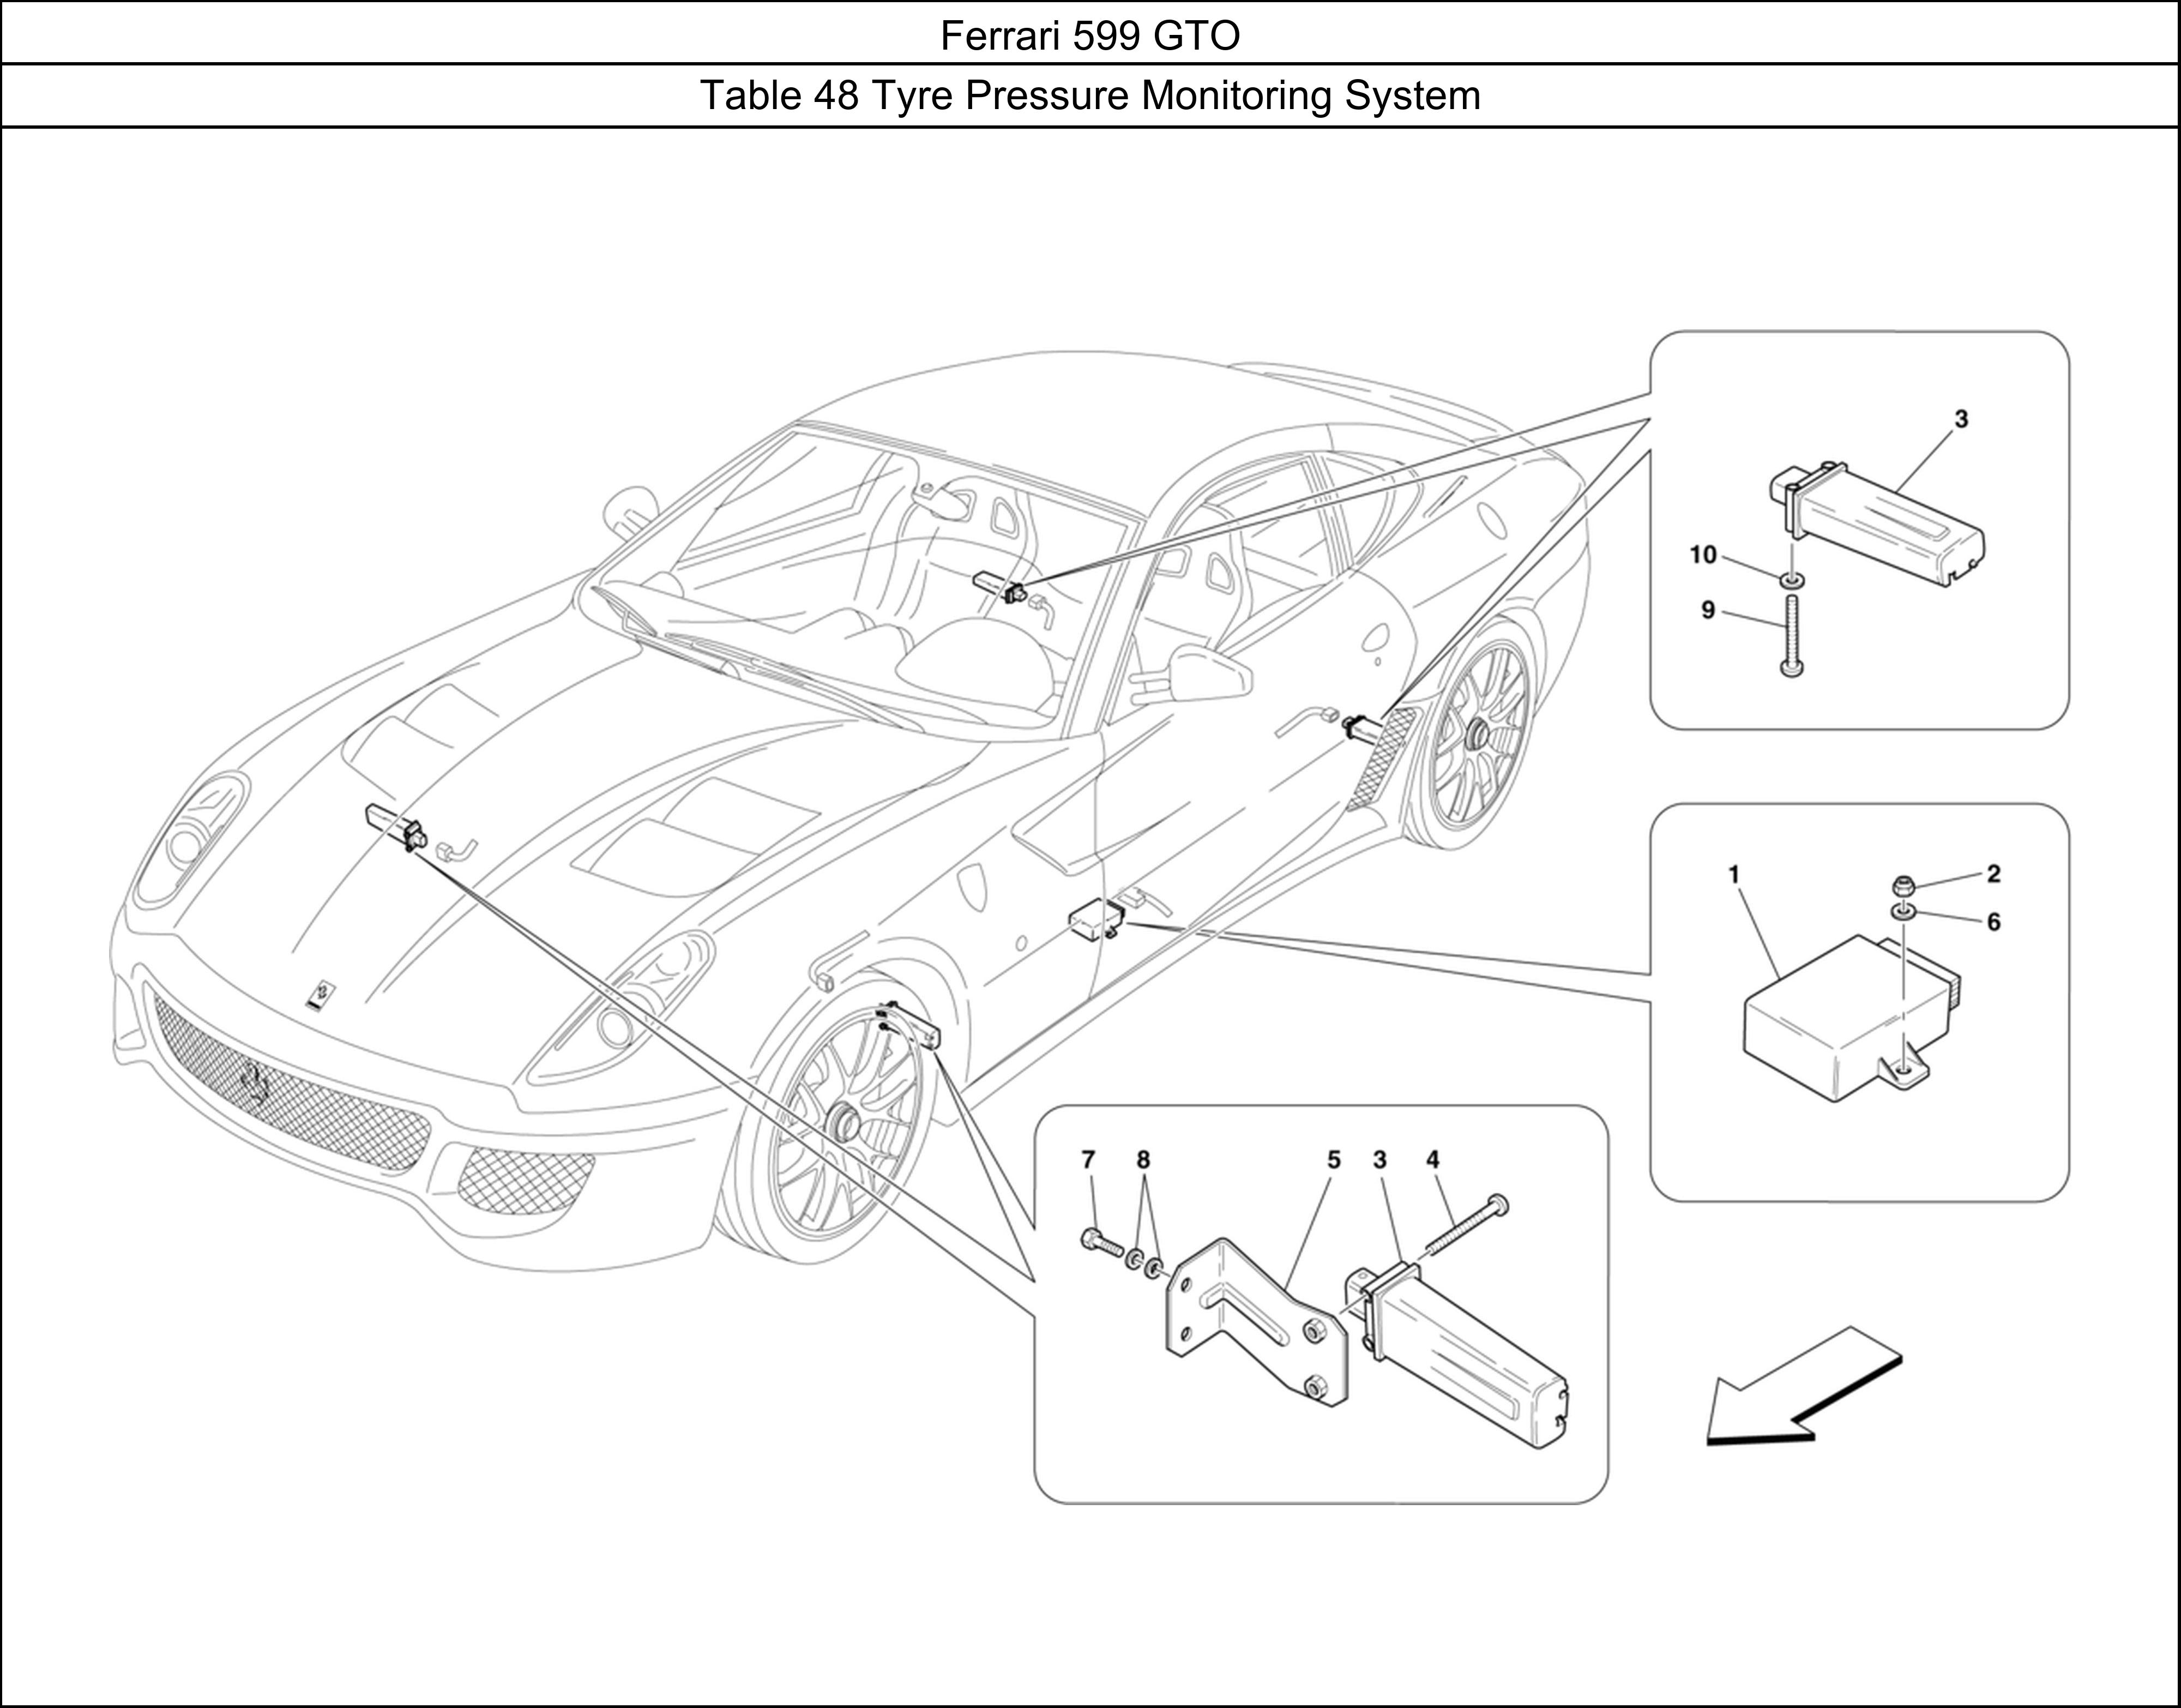 Ferrari Parts Ferrari 599 GTO Table 48 Tyre Pressure Monitoring System